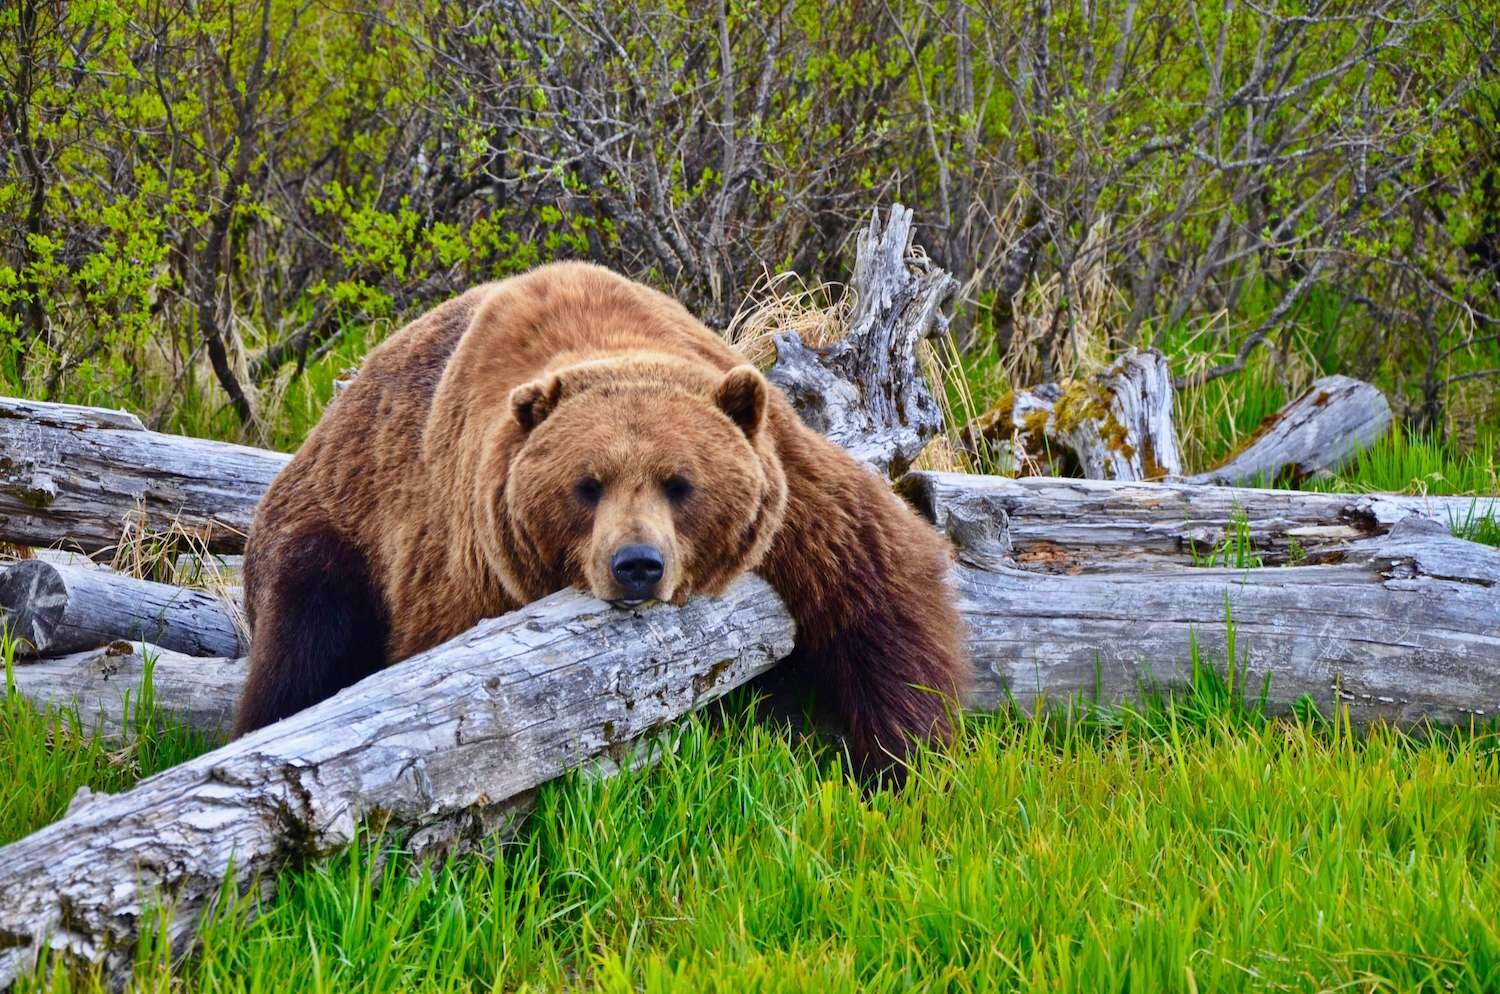 Photo by Alaska Wildlife Conservation Center